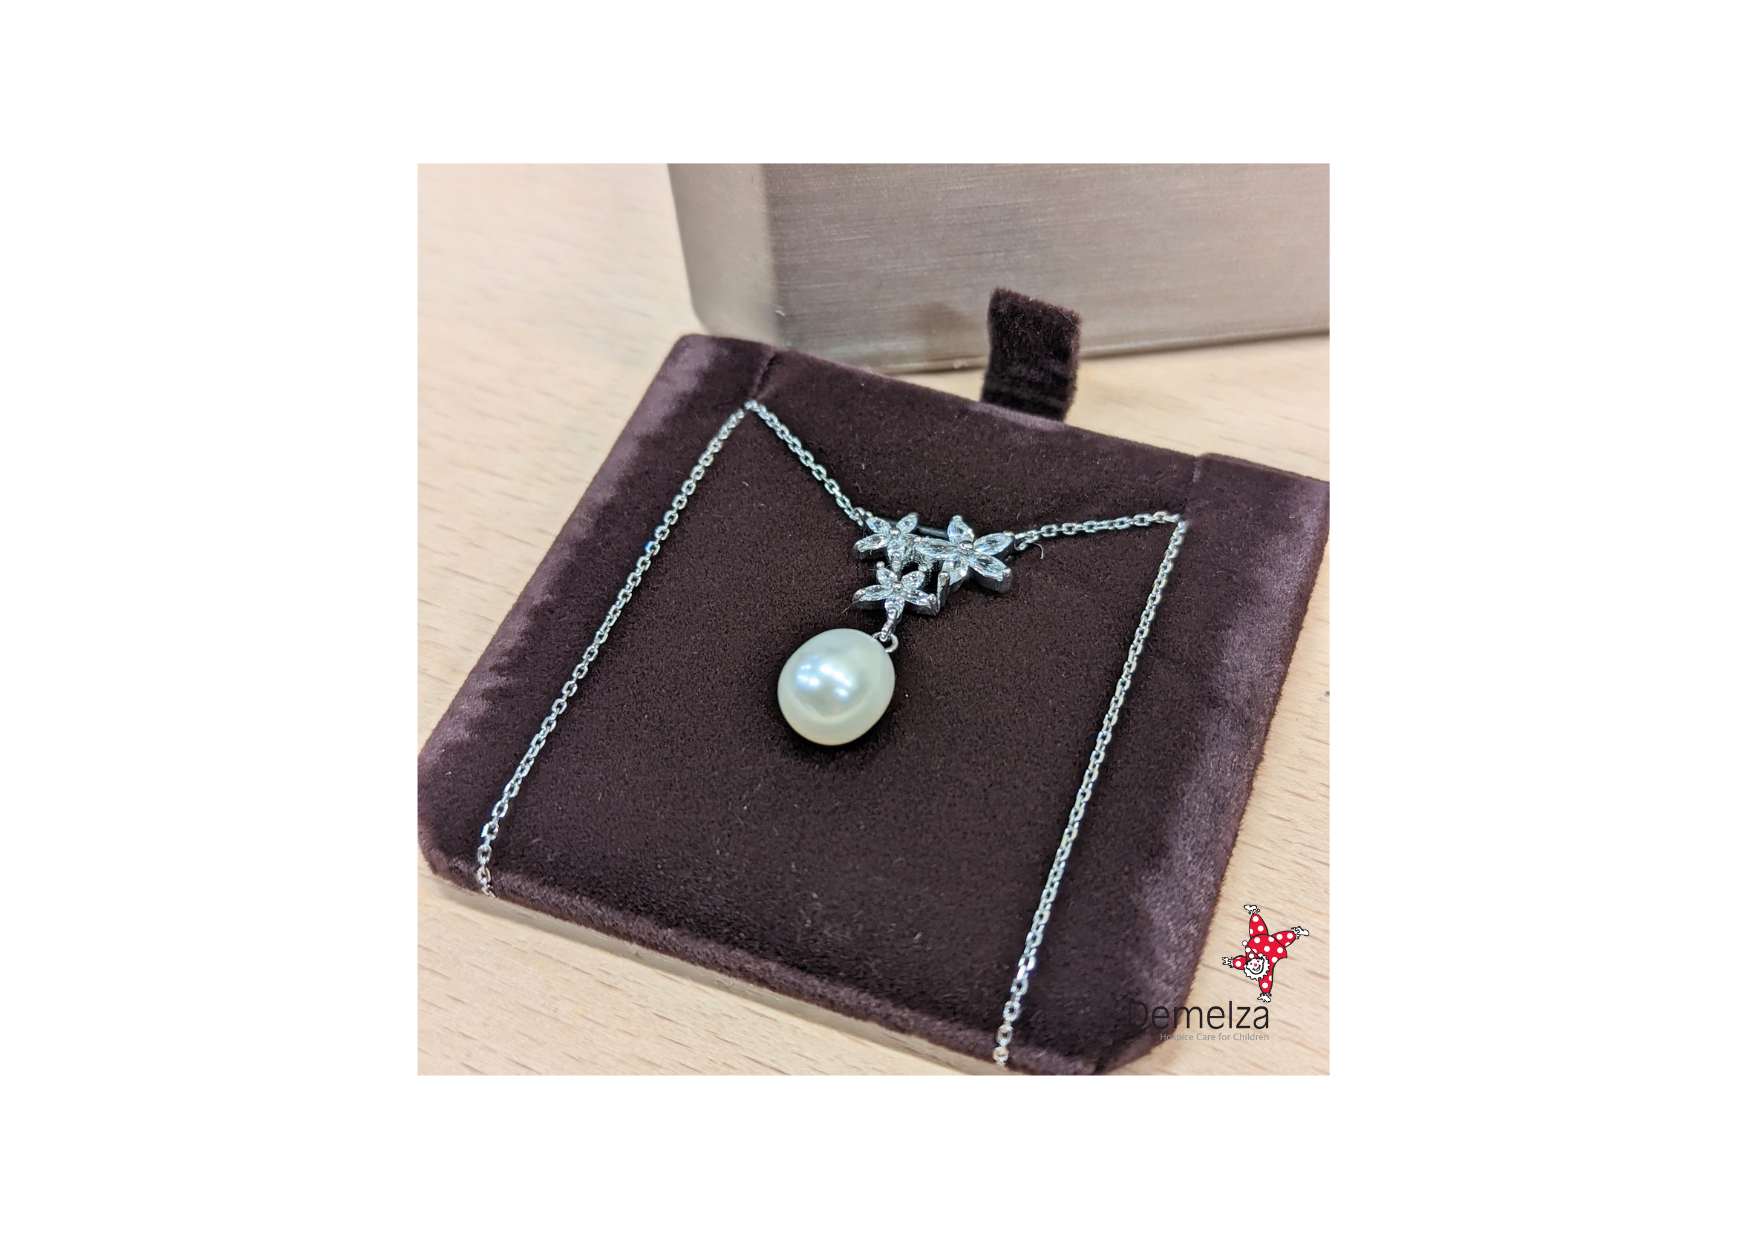 Star and pearl design pendant necklace in presentation box 